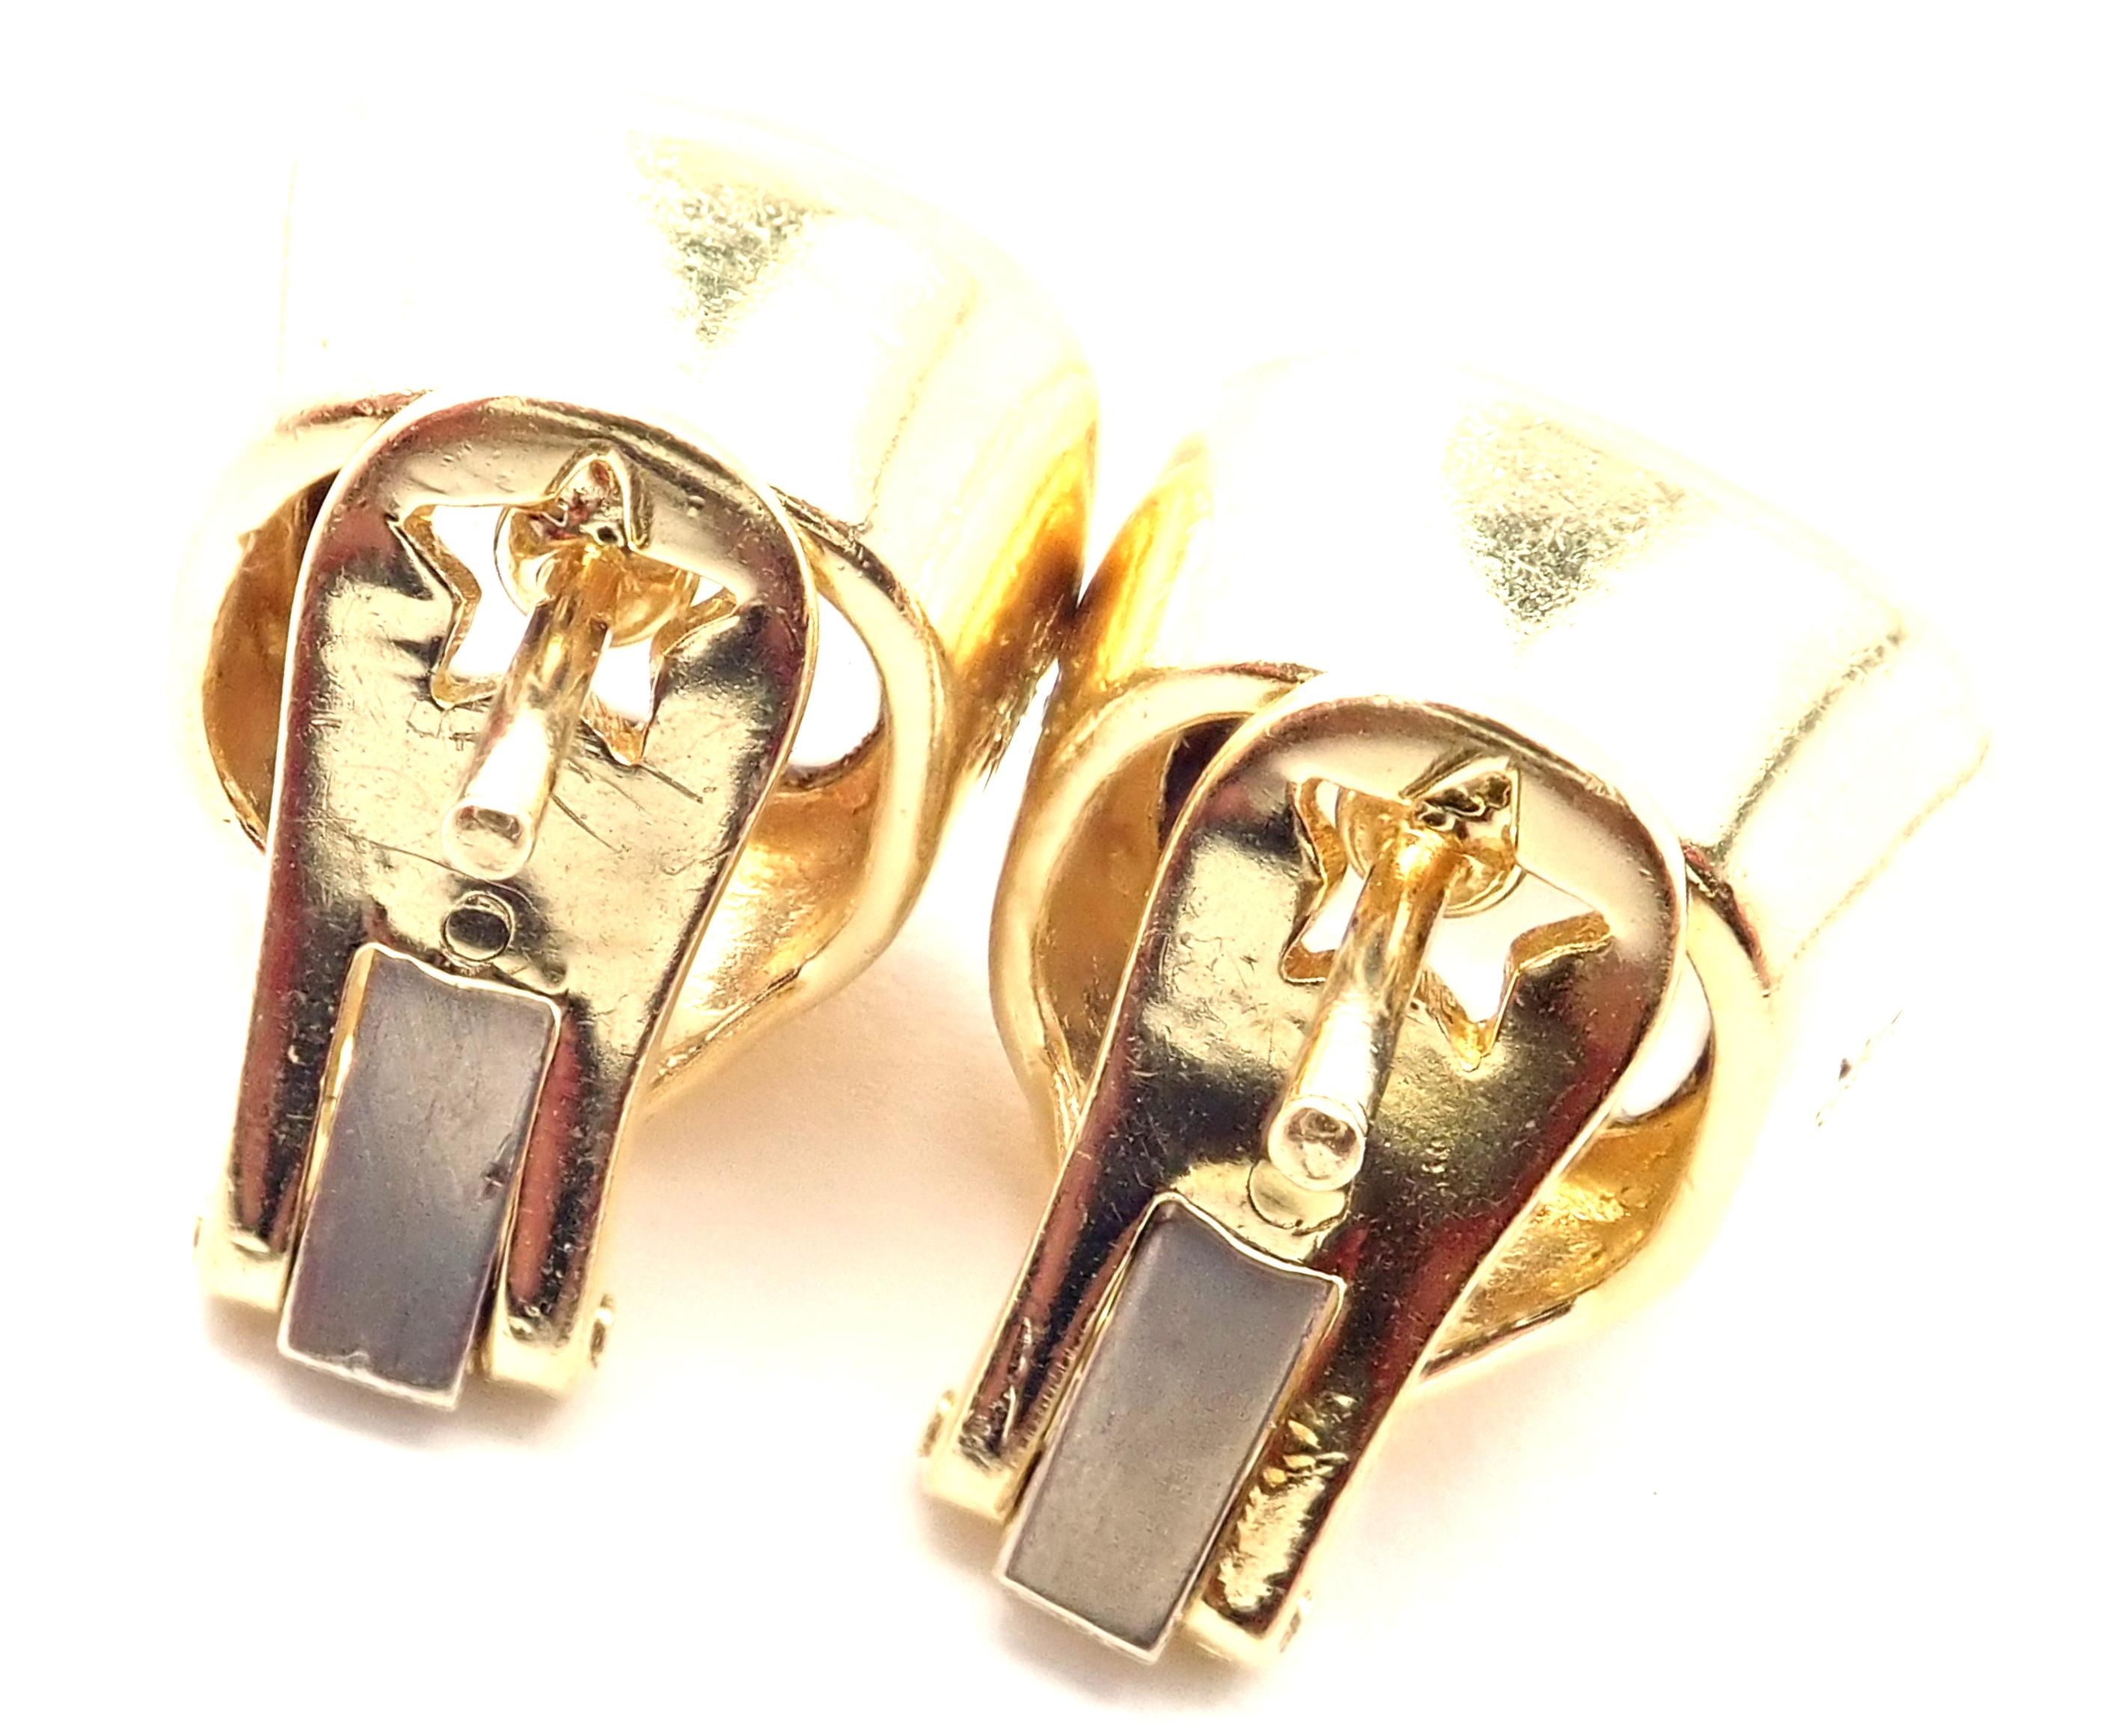 Brilliant Cut H. Stern Diamond Imperial Topaz Yellow Gold Earrings